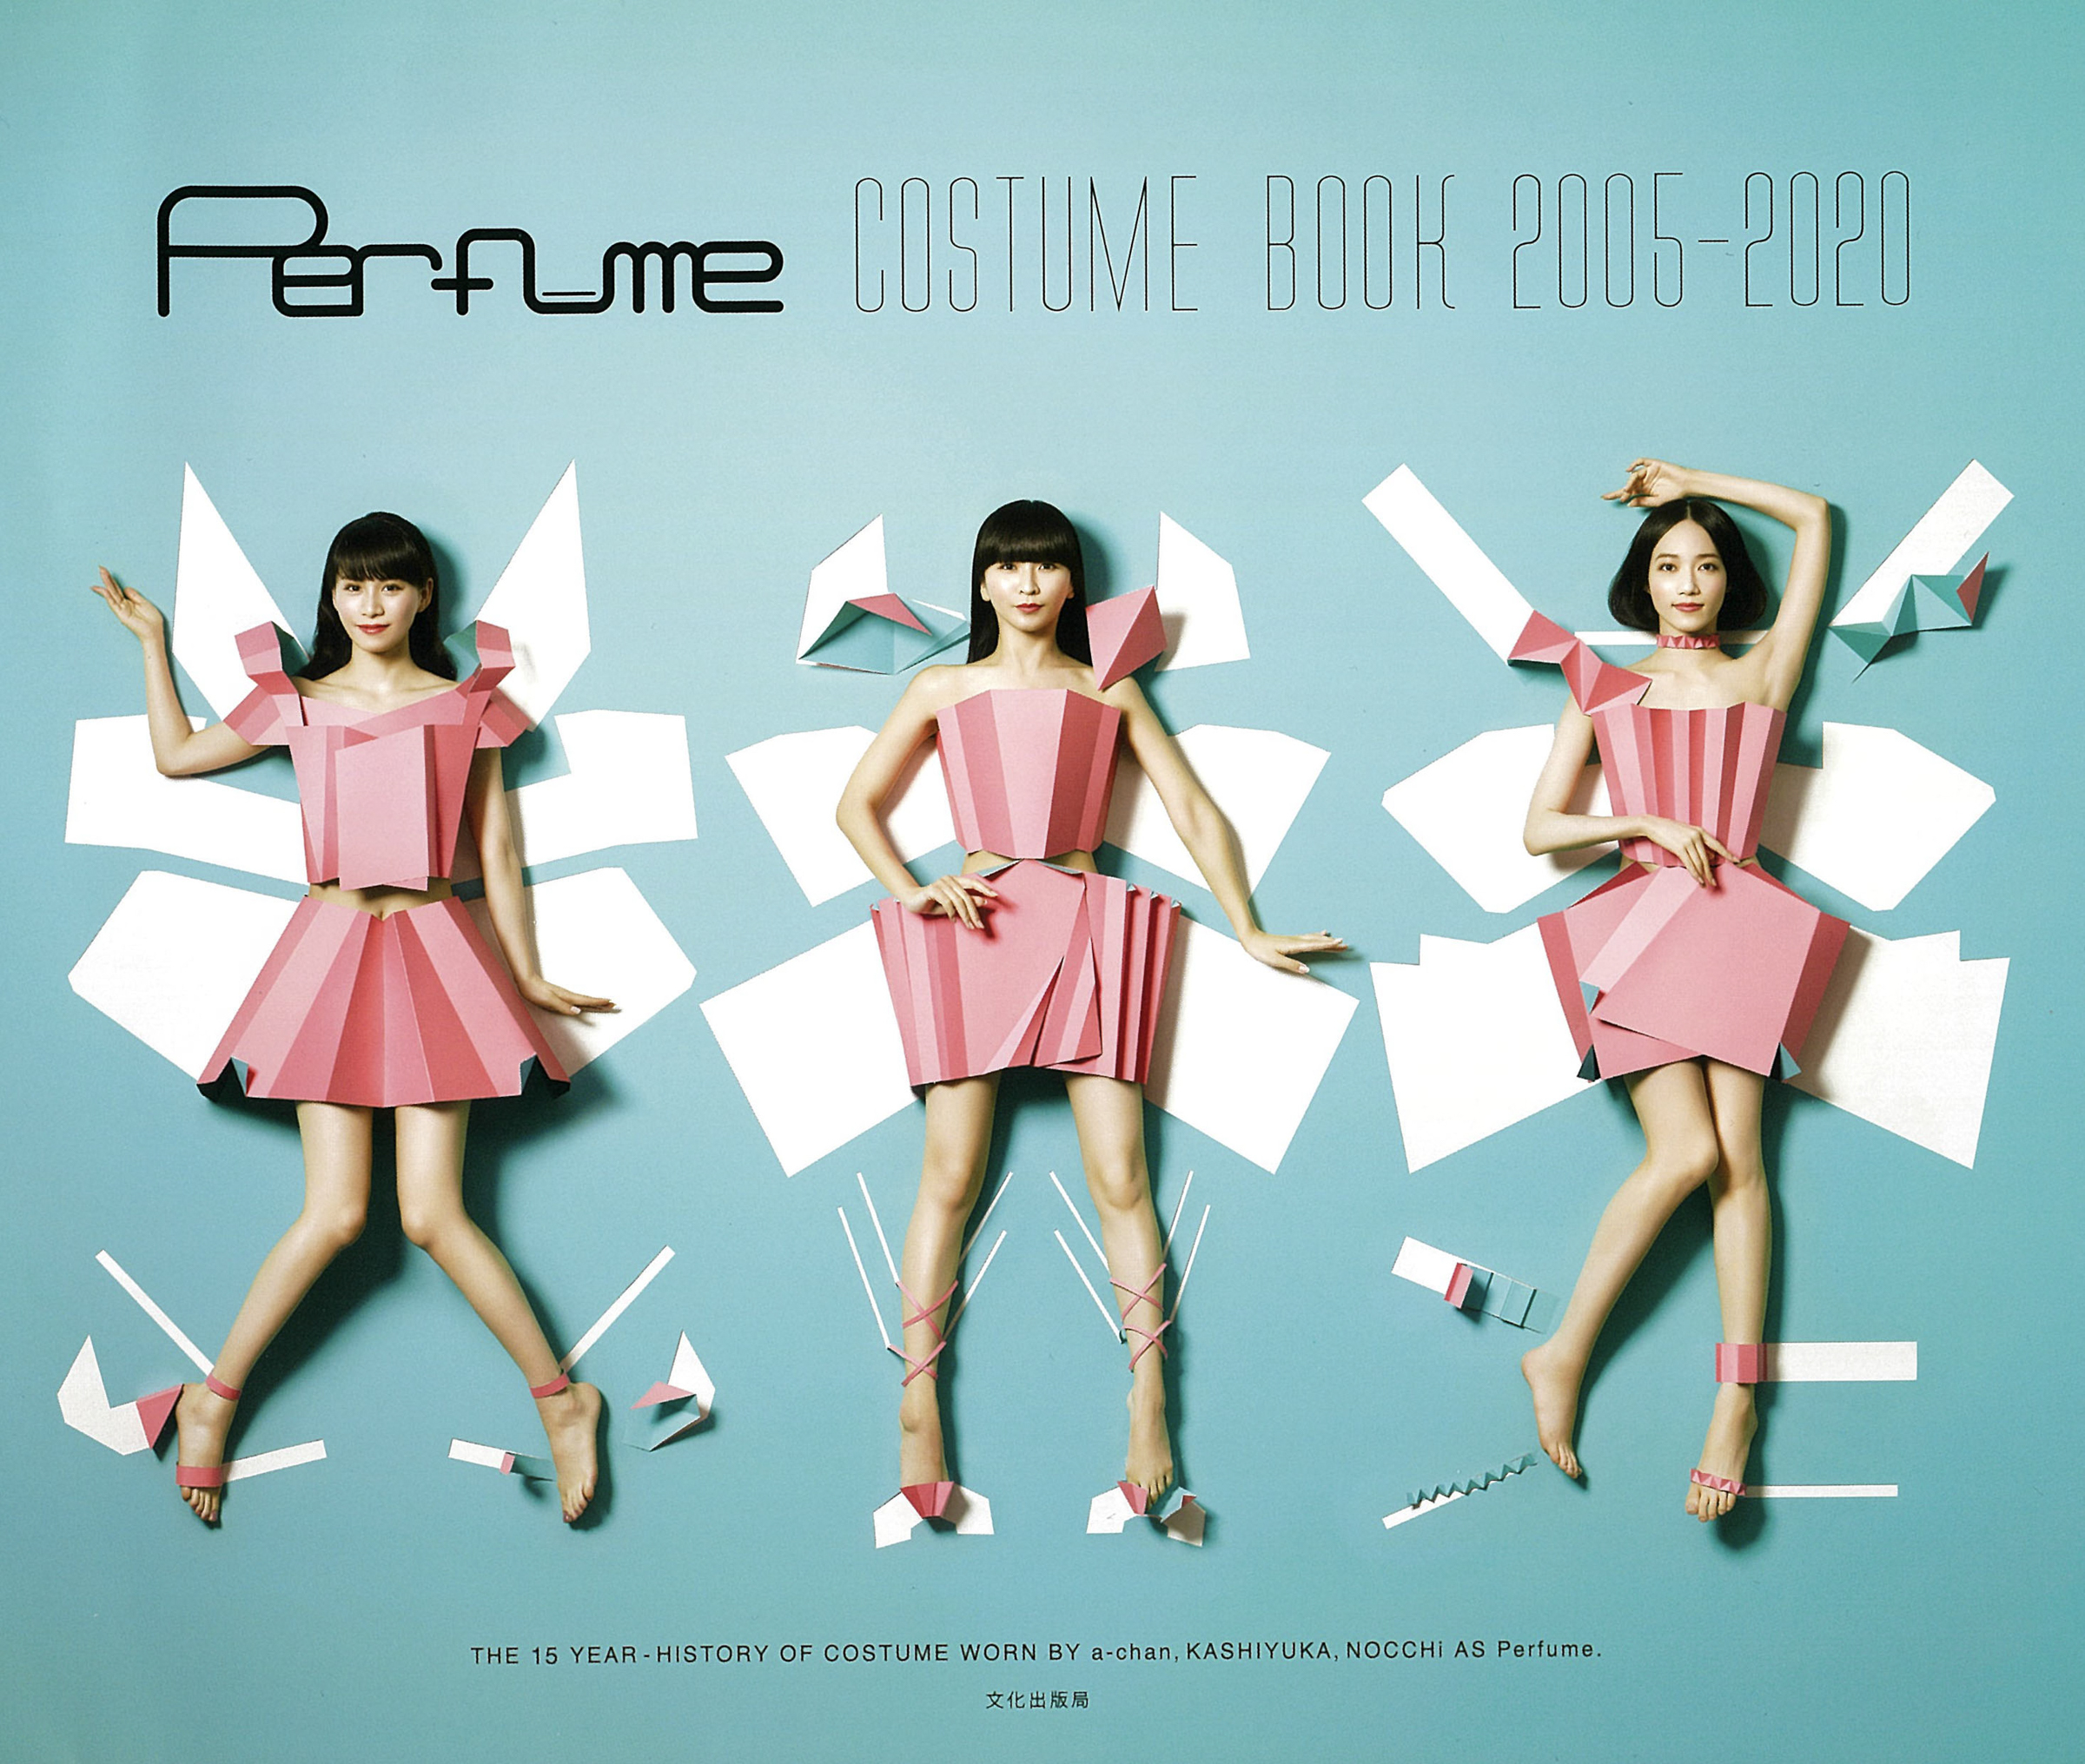 Perfumeが吉田カバンとコラボ、「ボンサック ミニ」を会員限定で発売